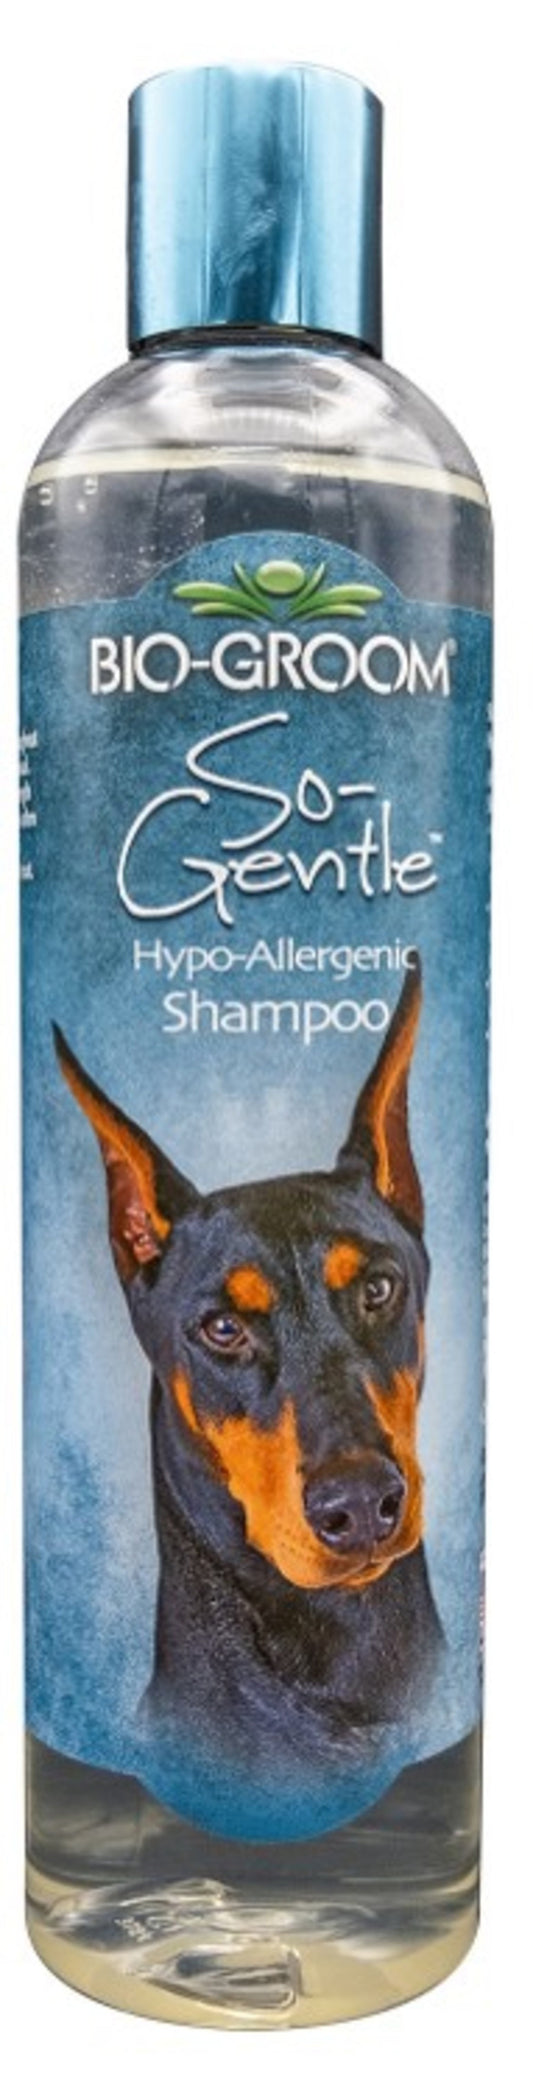 Bio Groom So-Gentle Hypo-Allergenic Shampoo 1ea/12 fl oz